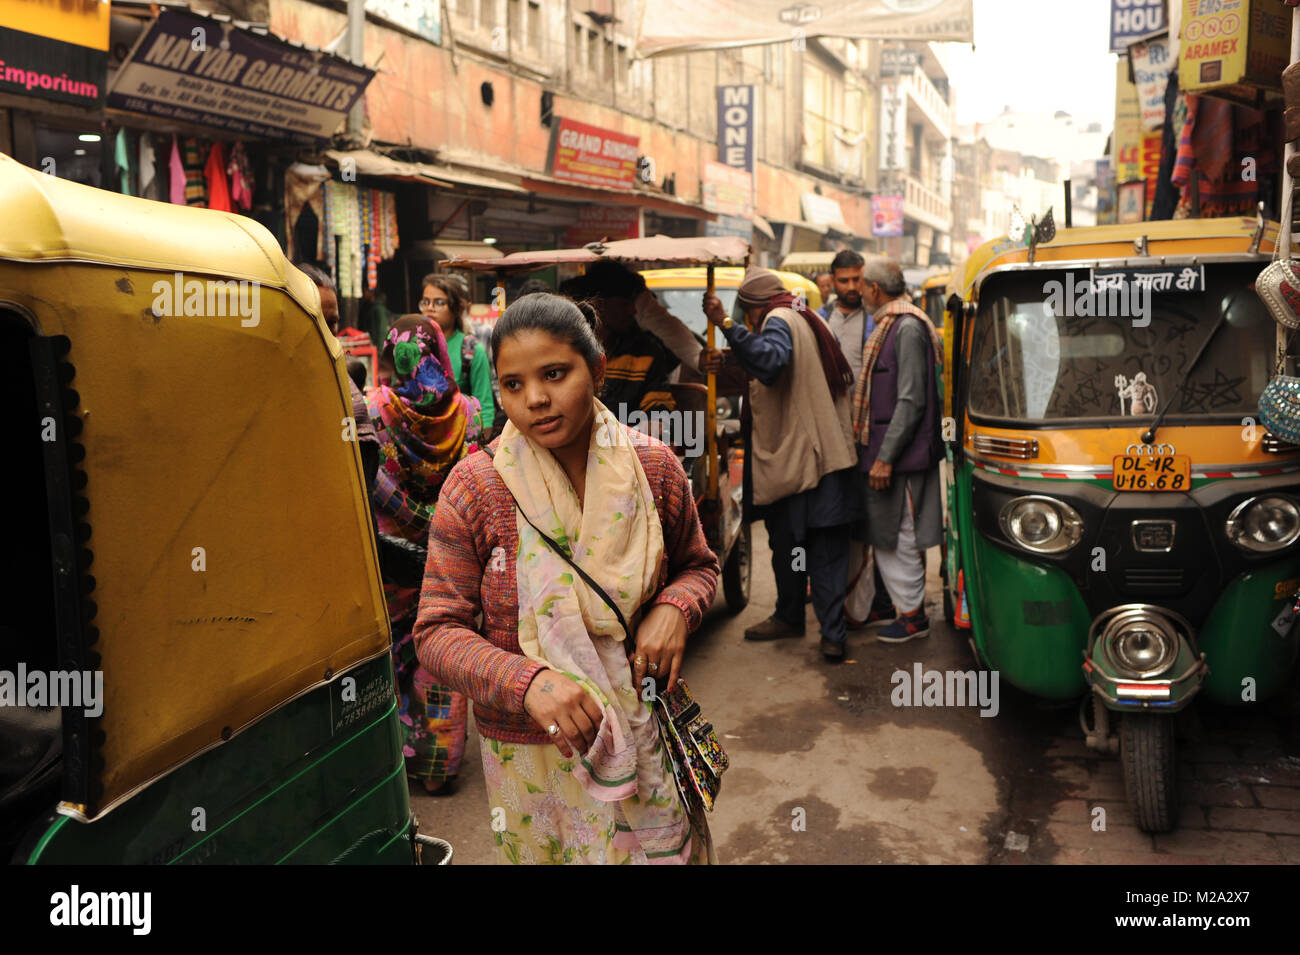 A busy street scene in Paharganj, India Stock Photo